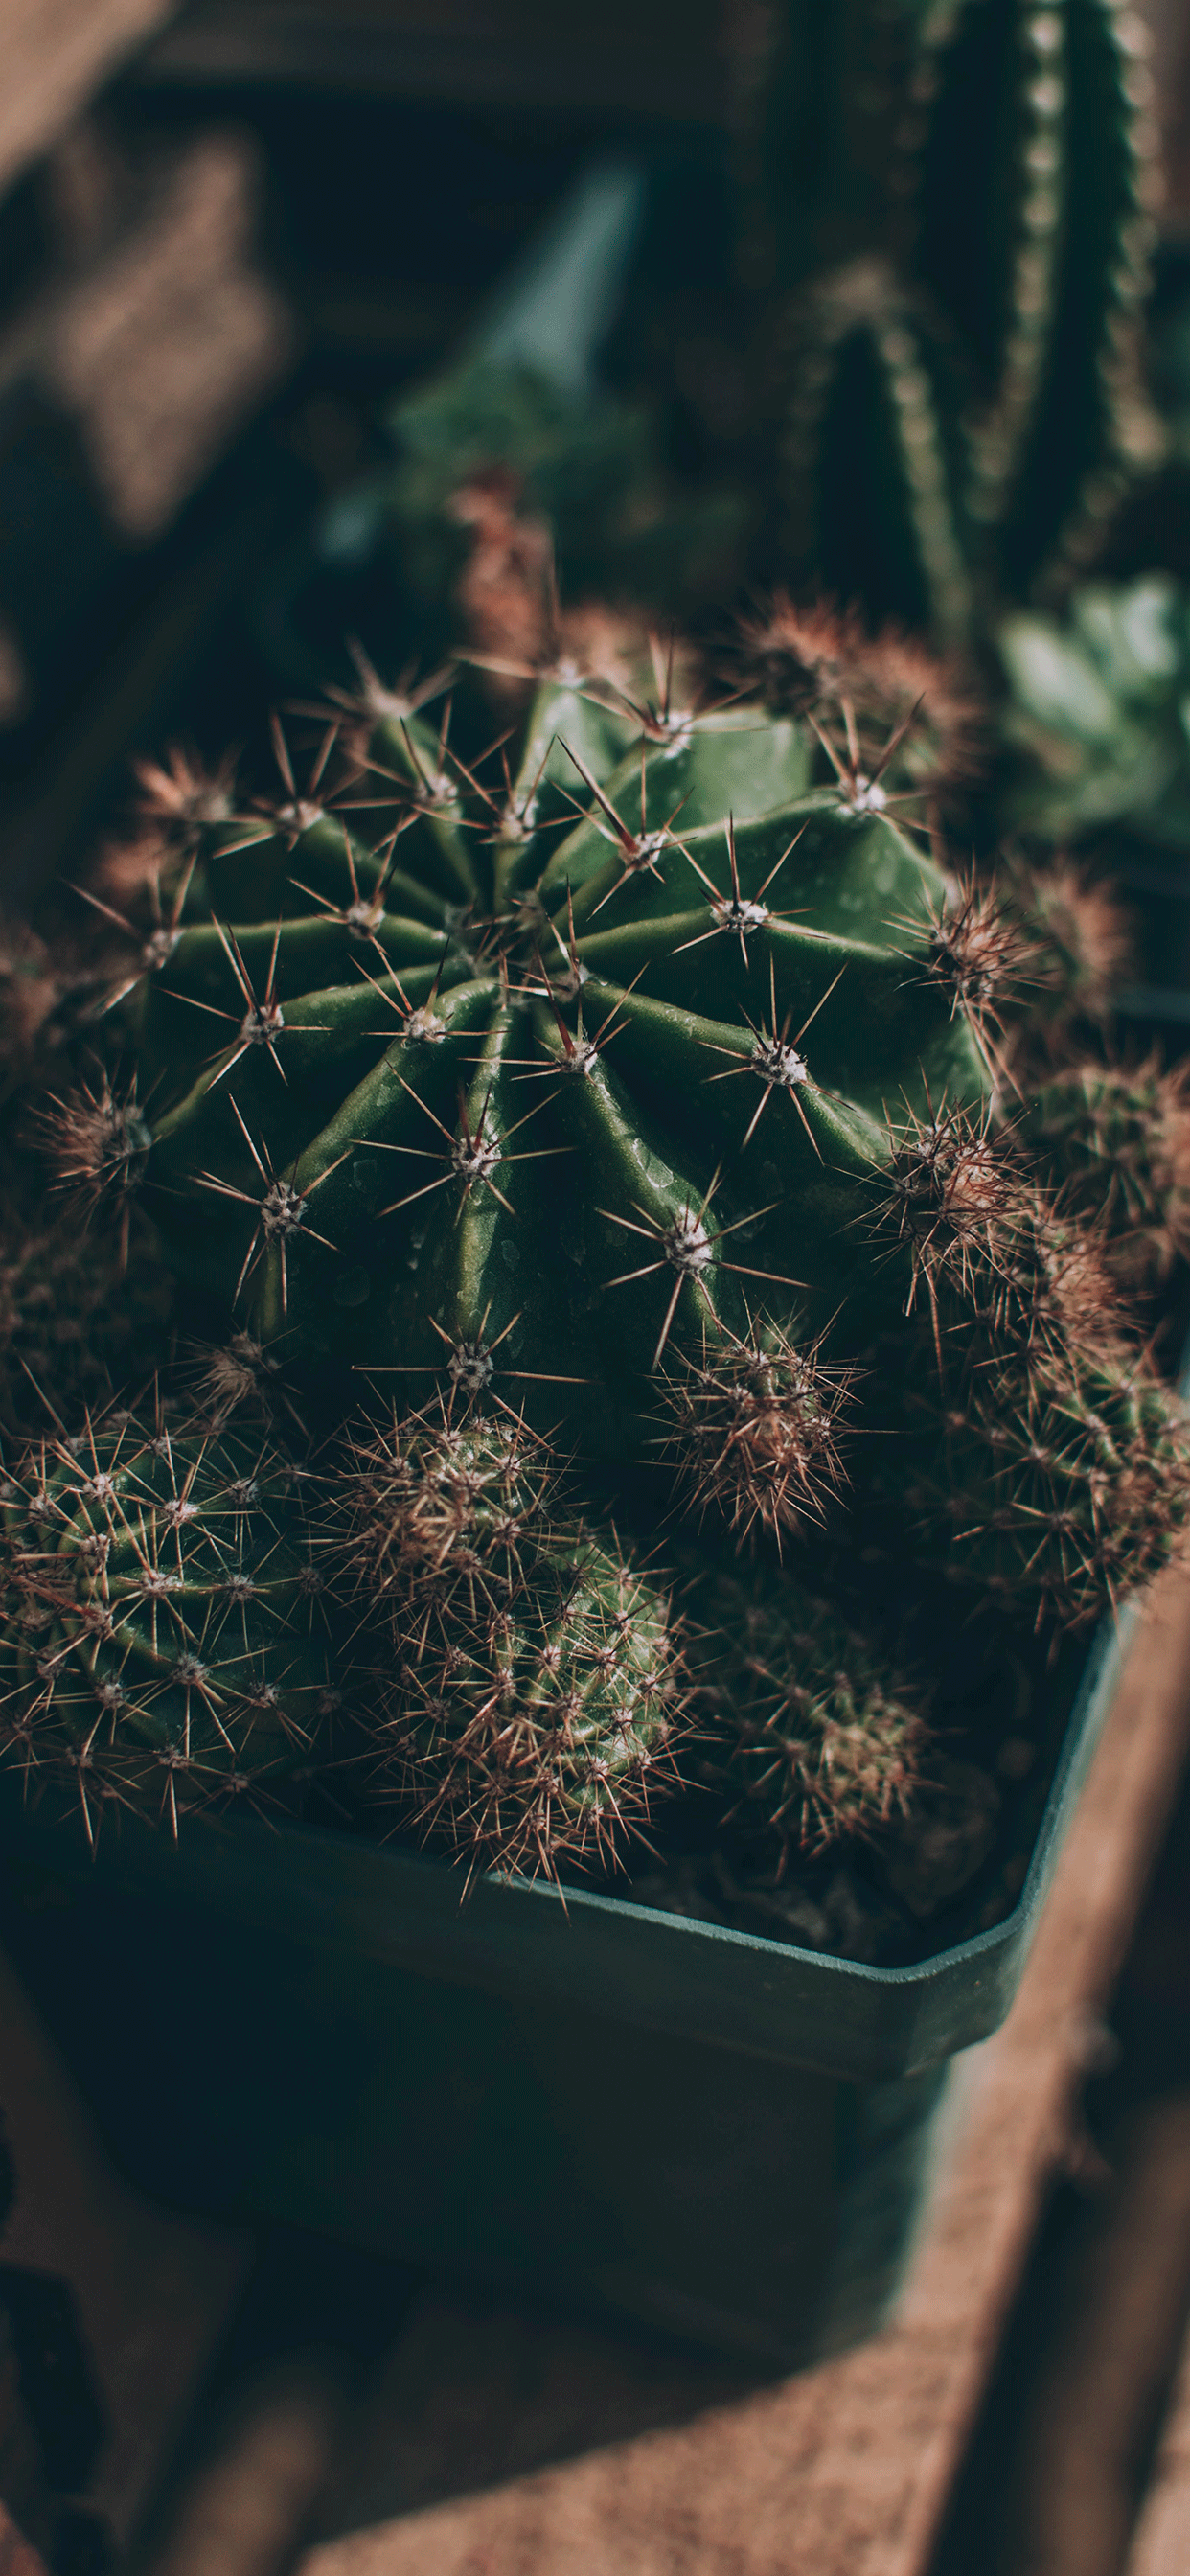 Fondos de pantalla de cactus - FondosMil